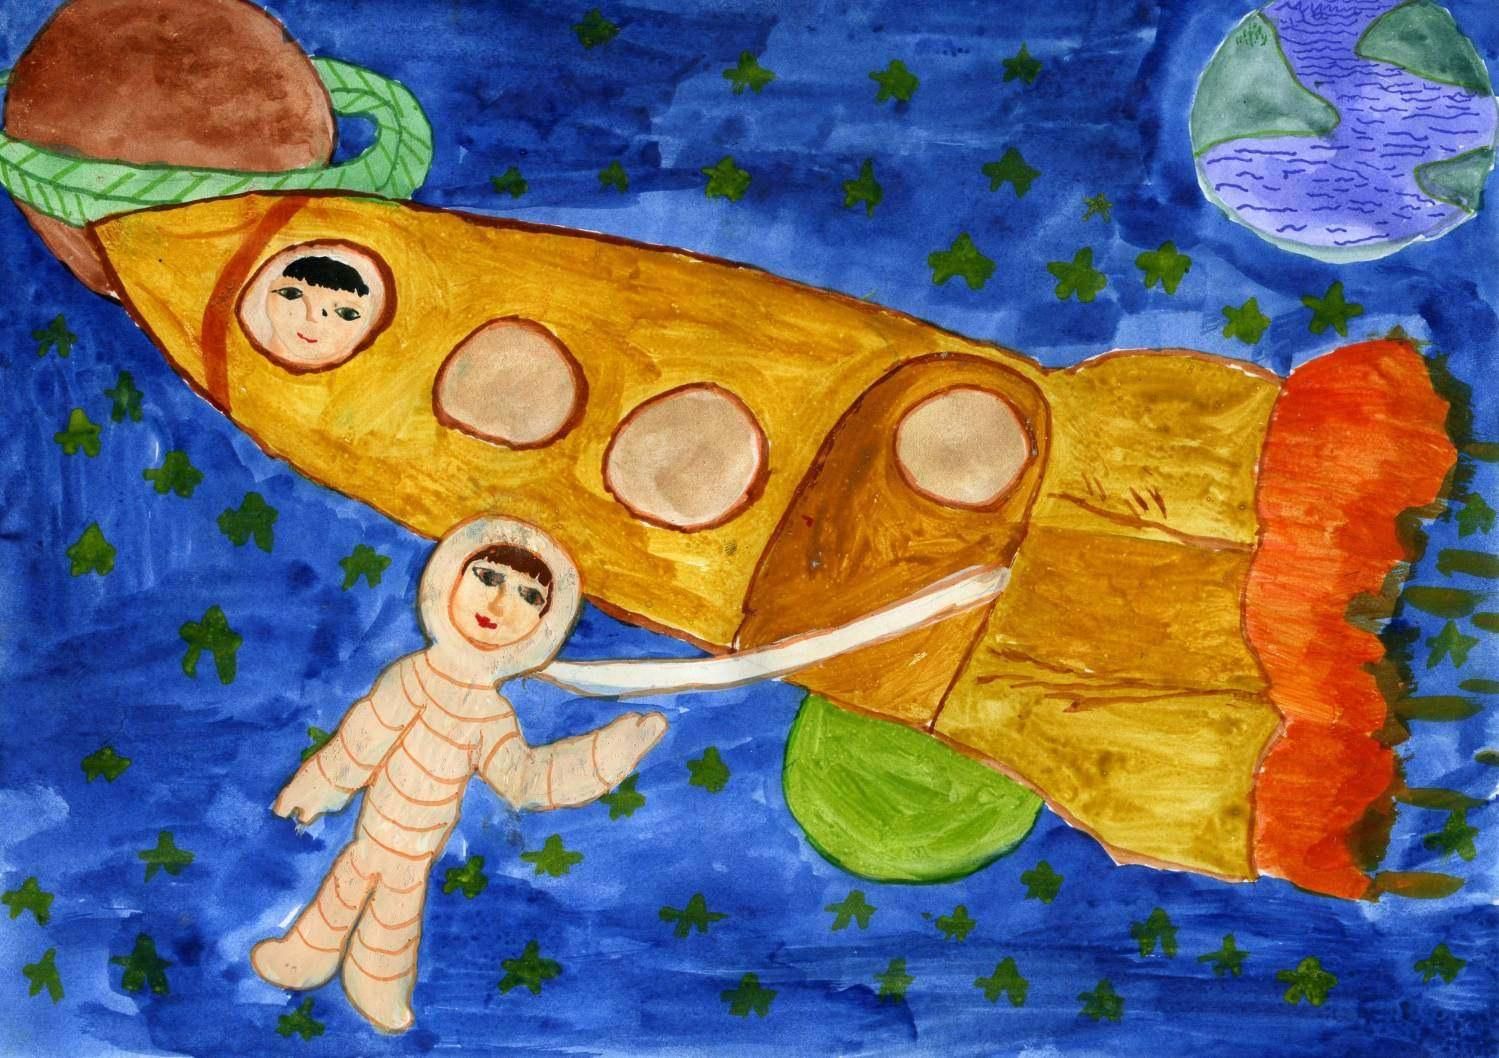 Конкурс детских рисунков ко дню космонавтики. Рисунок ко Дню космонавтики. Рисунок о дне космонавтики. Детские рисунки на тему космос. Рисунок на день космонавтиков.